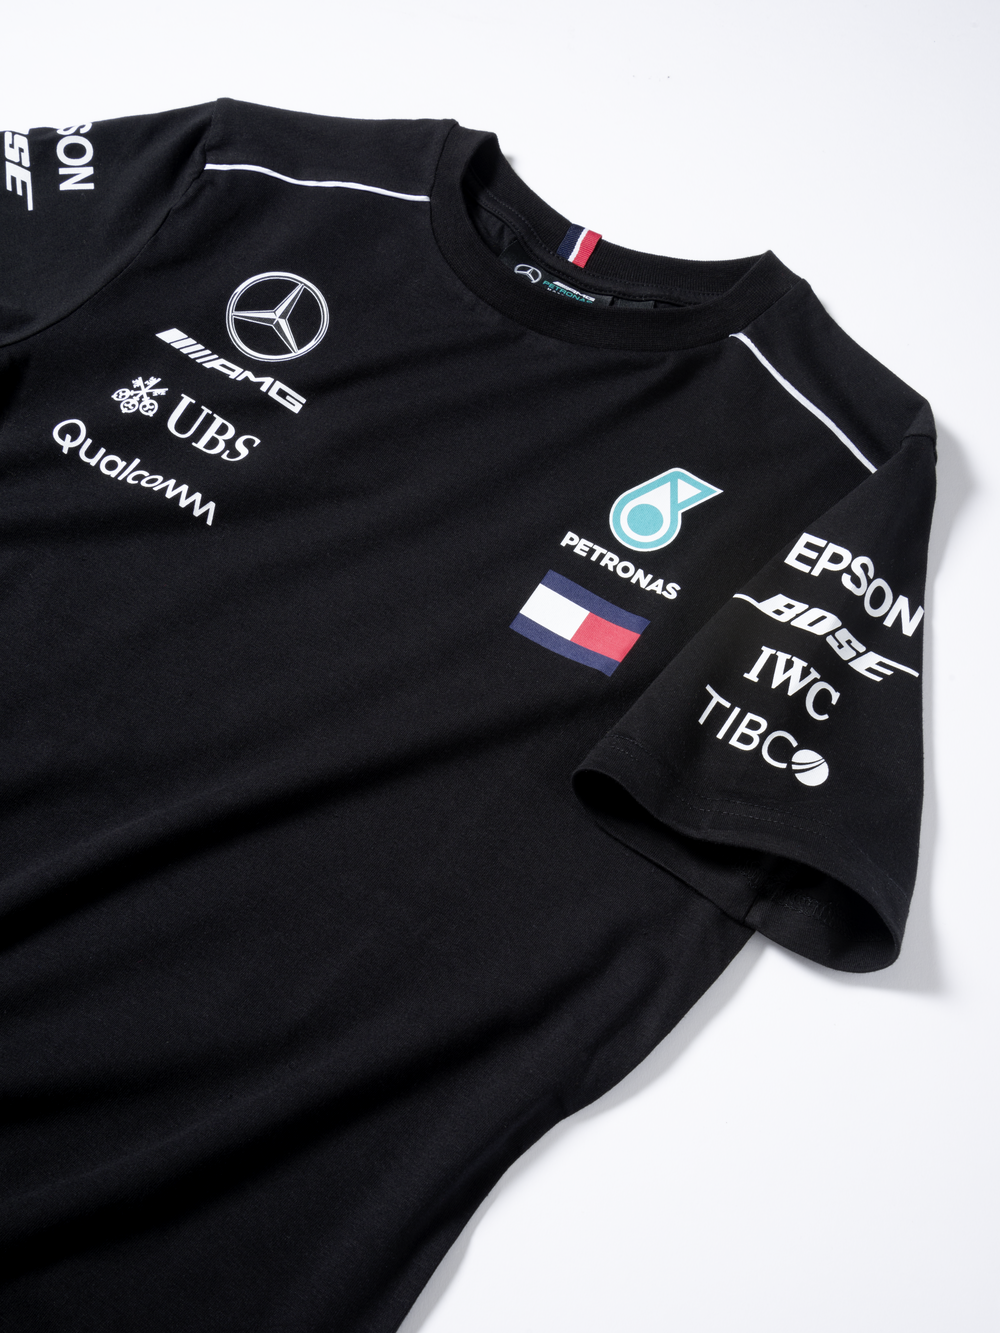 Black, 152 Mercedes-AMG Petronas Motorsport 2019 F1™ Camiseta del Equipo Negra niño 